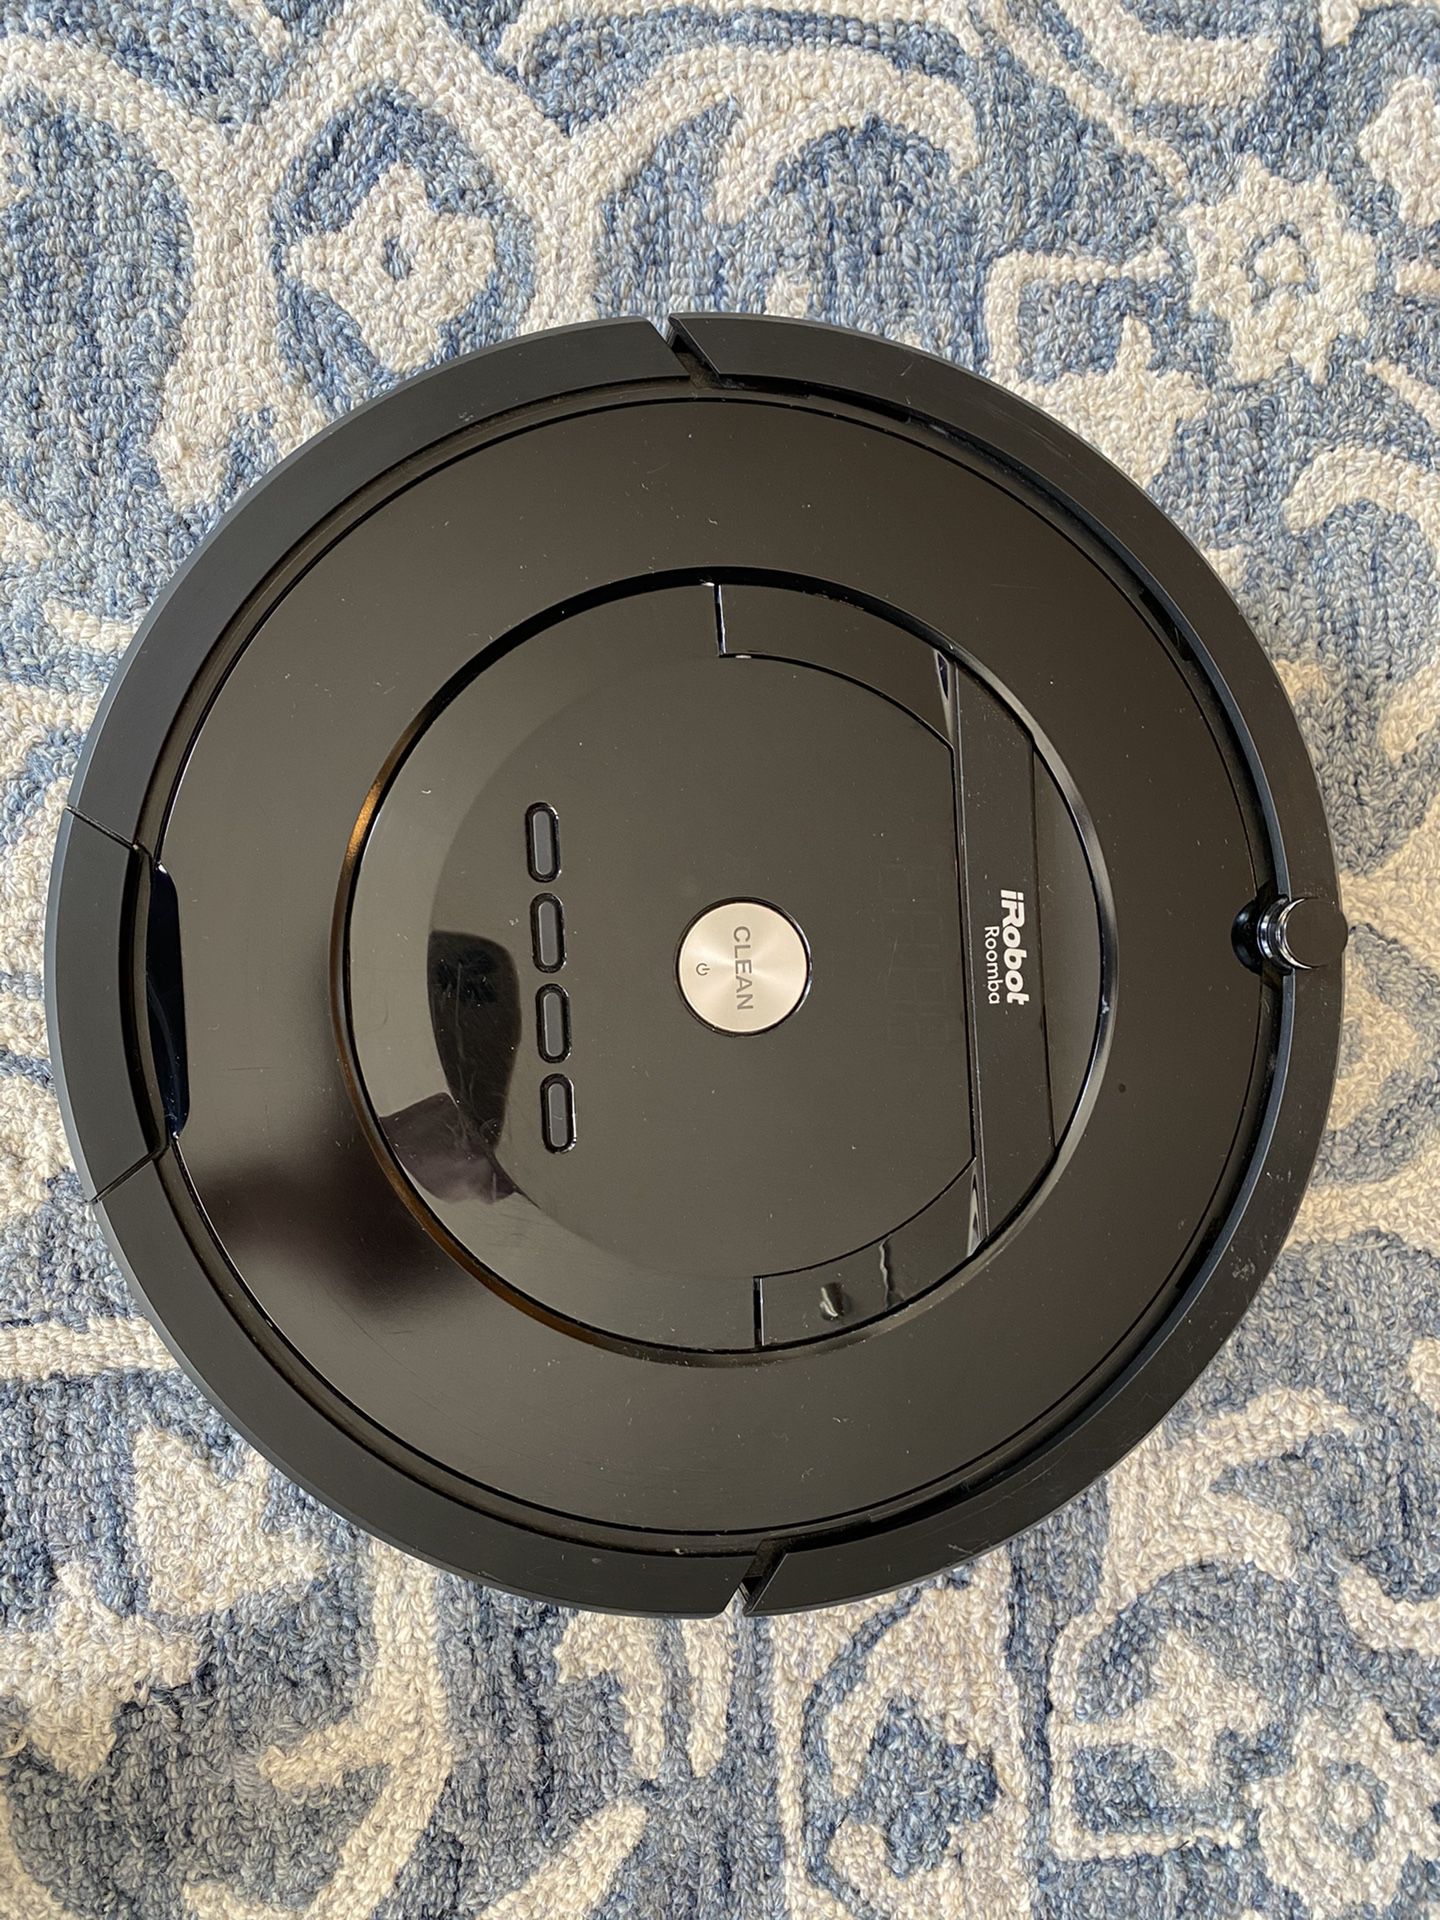 iRobot Roomba Vacuum with laser barriers